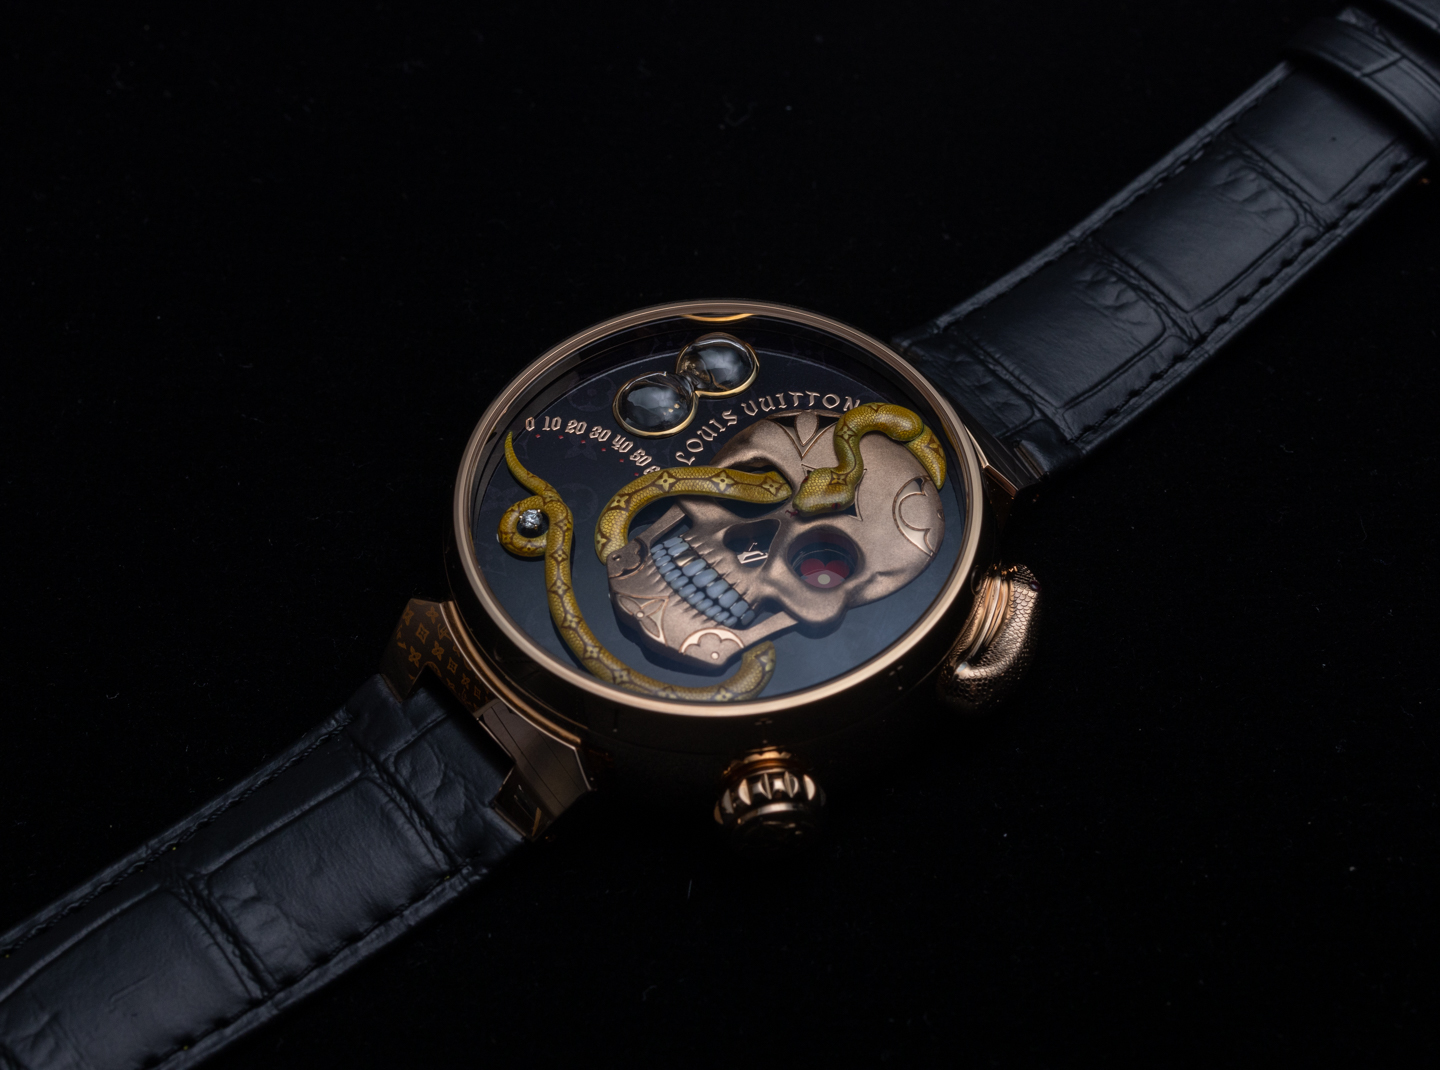 Louis Vuitton Reveals Its Subversive Style With The Tambour Carpe Diem Watch